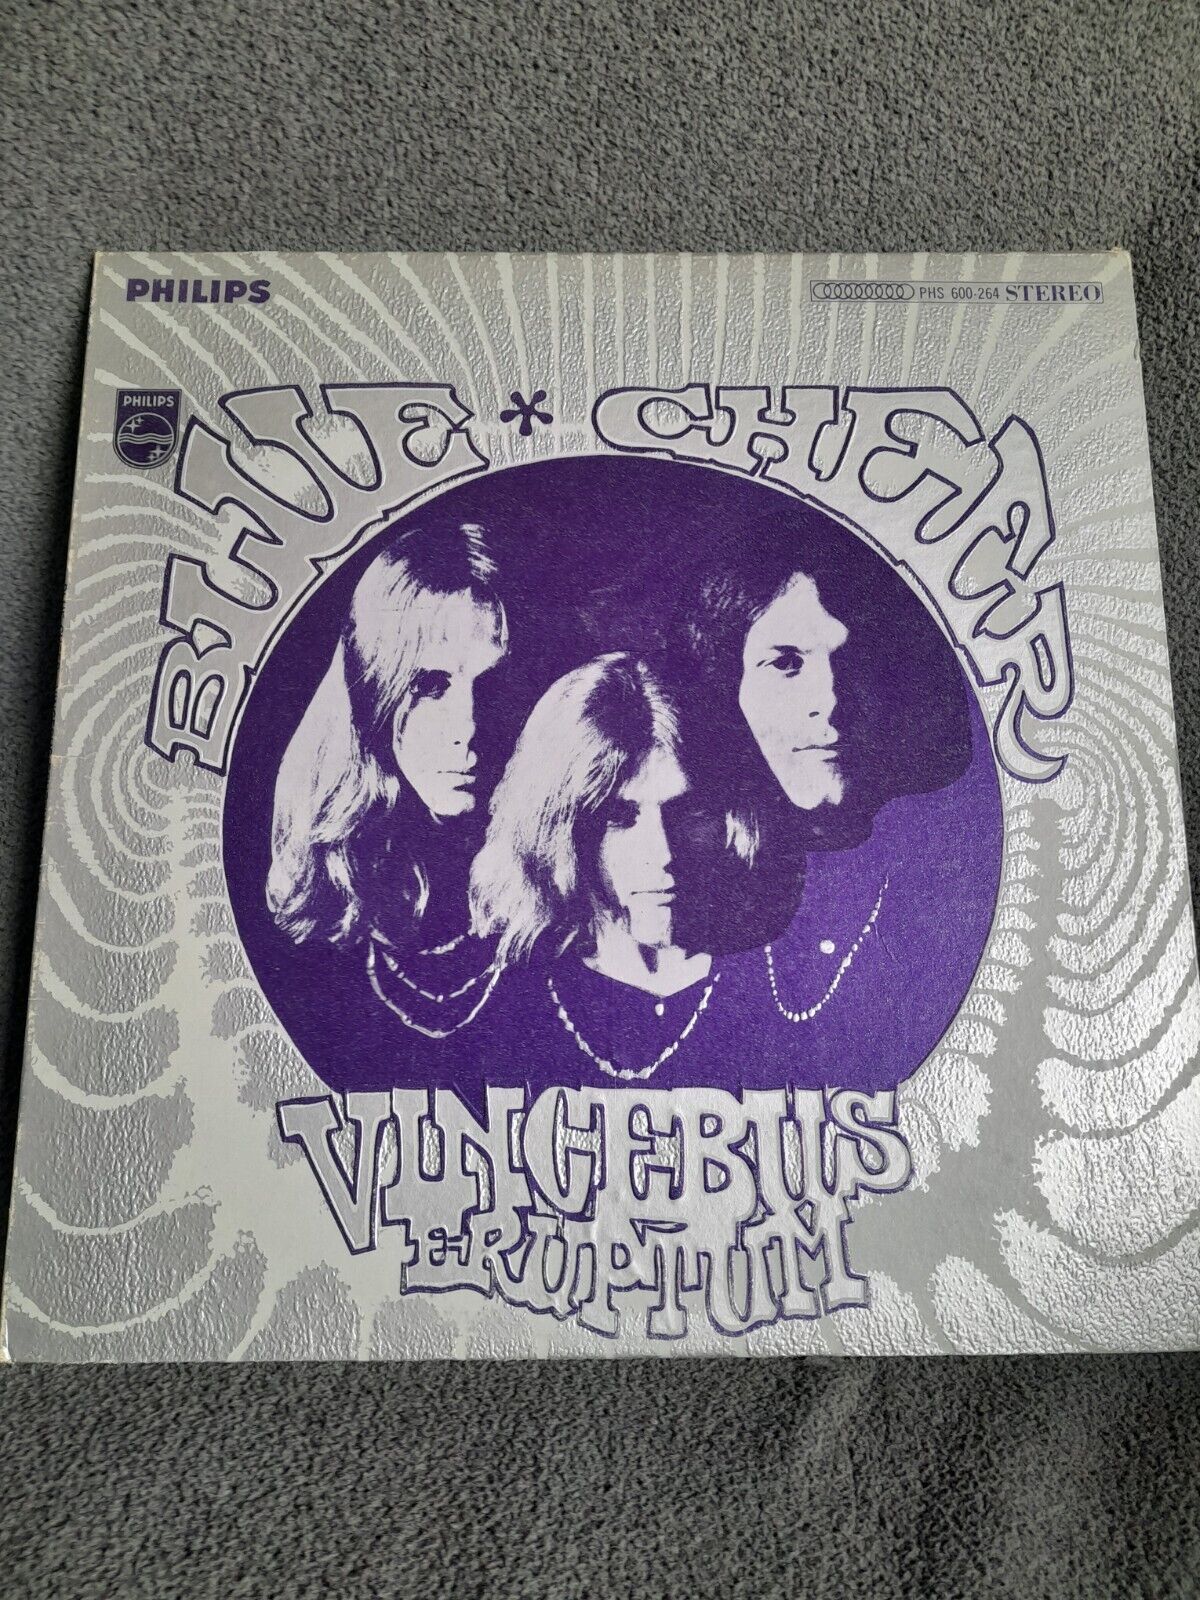 Blue Cheer – Vincebus Eruptum, 1968 LP, Philips – PHS 600-264 VG+